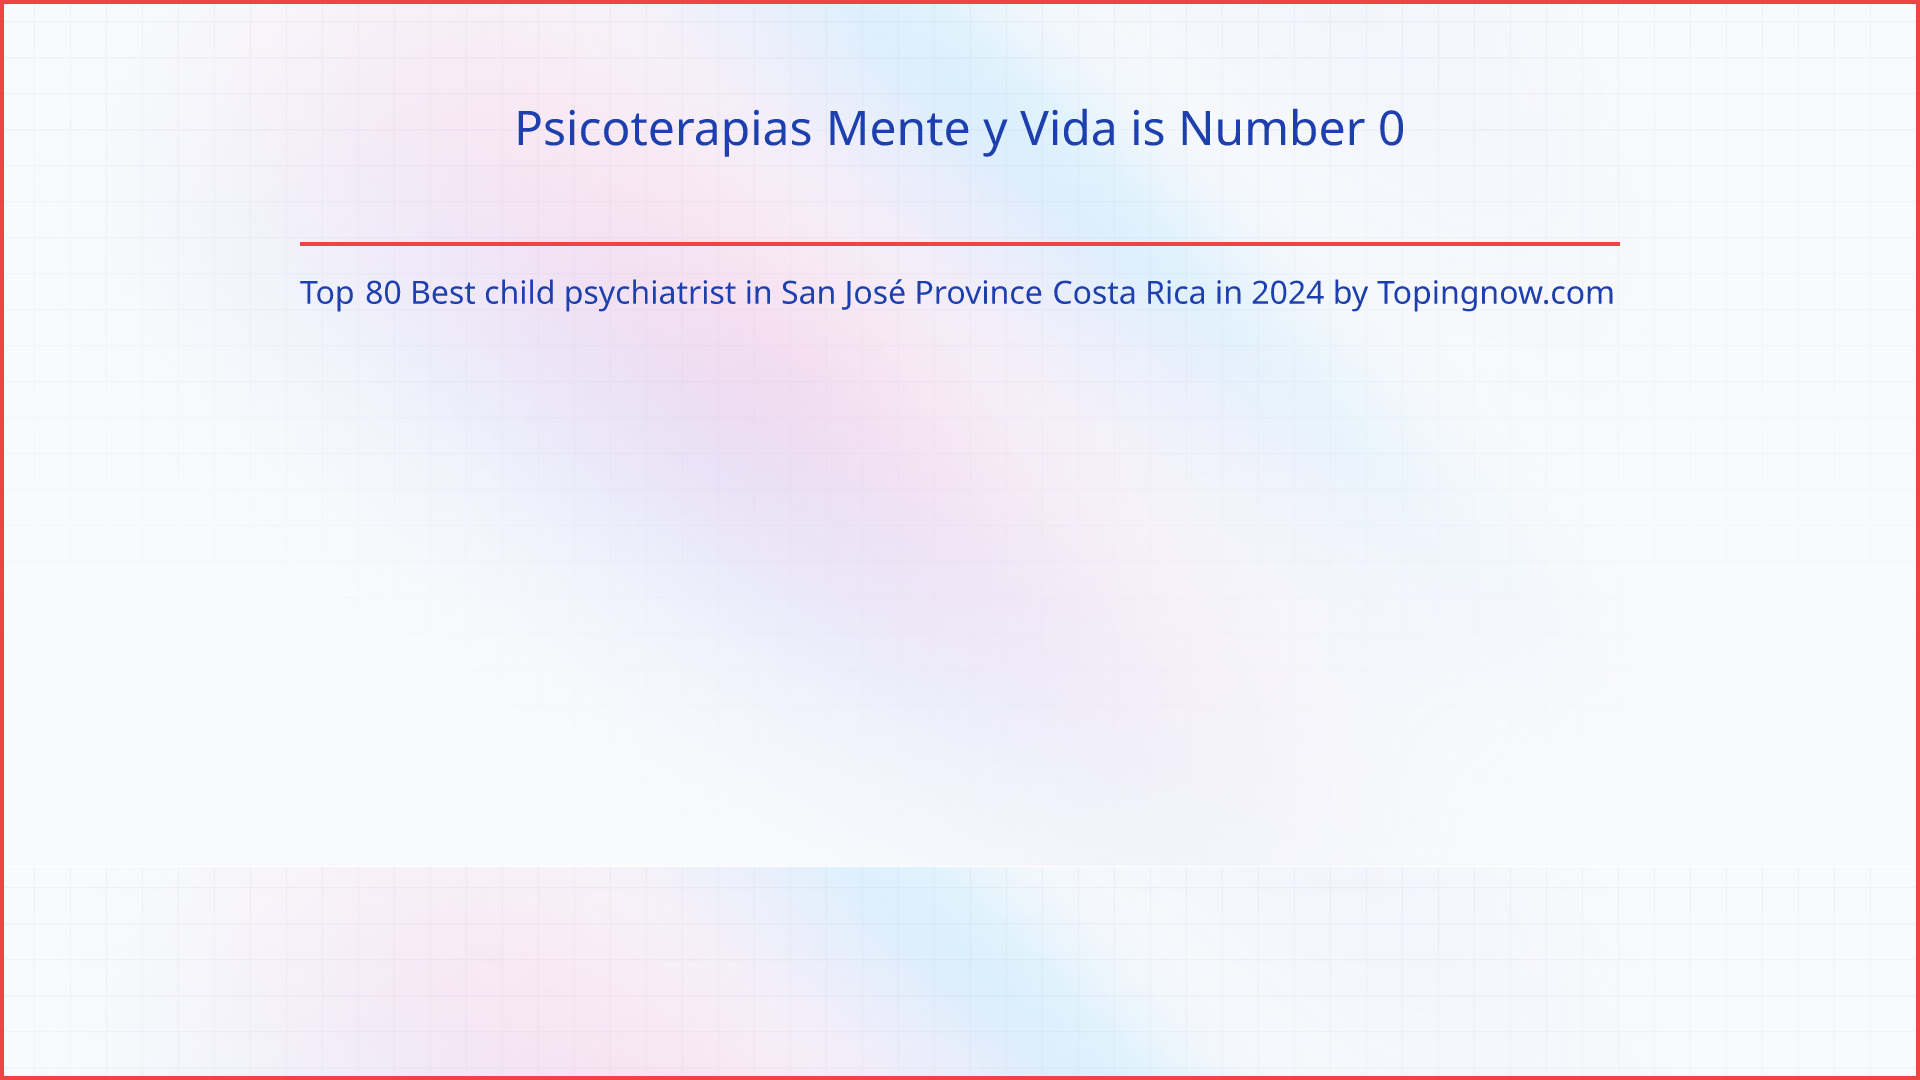 Psicoterapias Mente y Vida: Top 80 Best child psychiatrist in San José Province Costa Rica in 2024